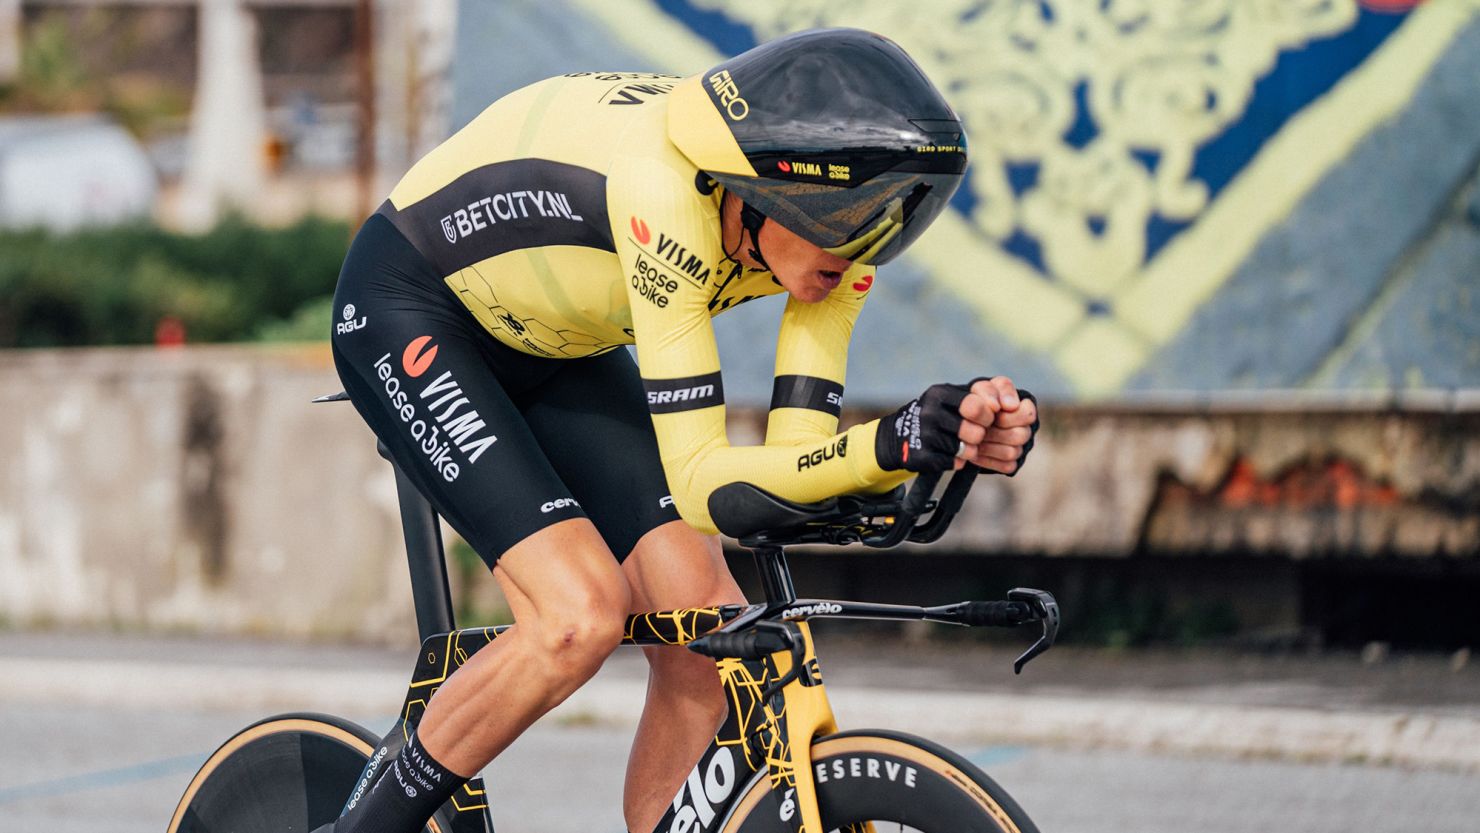 Visma-Lease a Bike rider Robert Gesink wears the team's new helmet at the Tirreno-Adriatico this week.